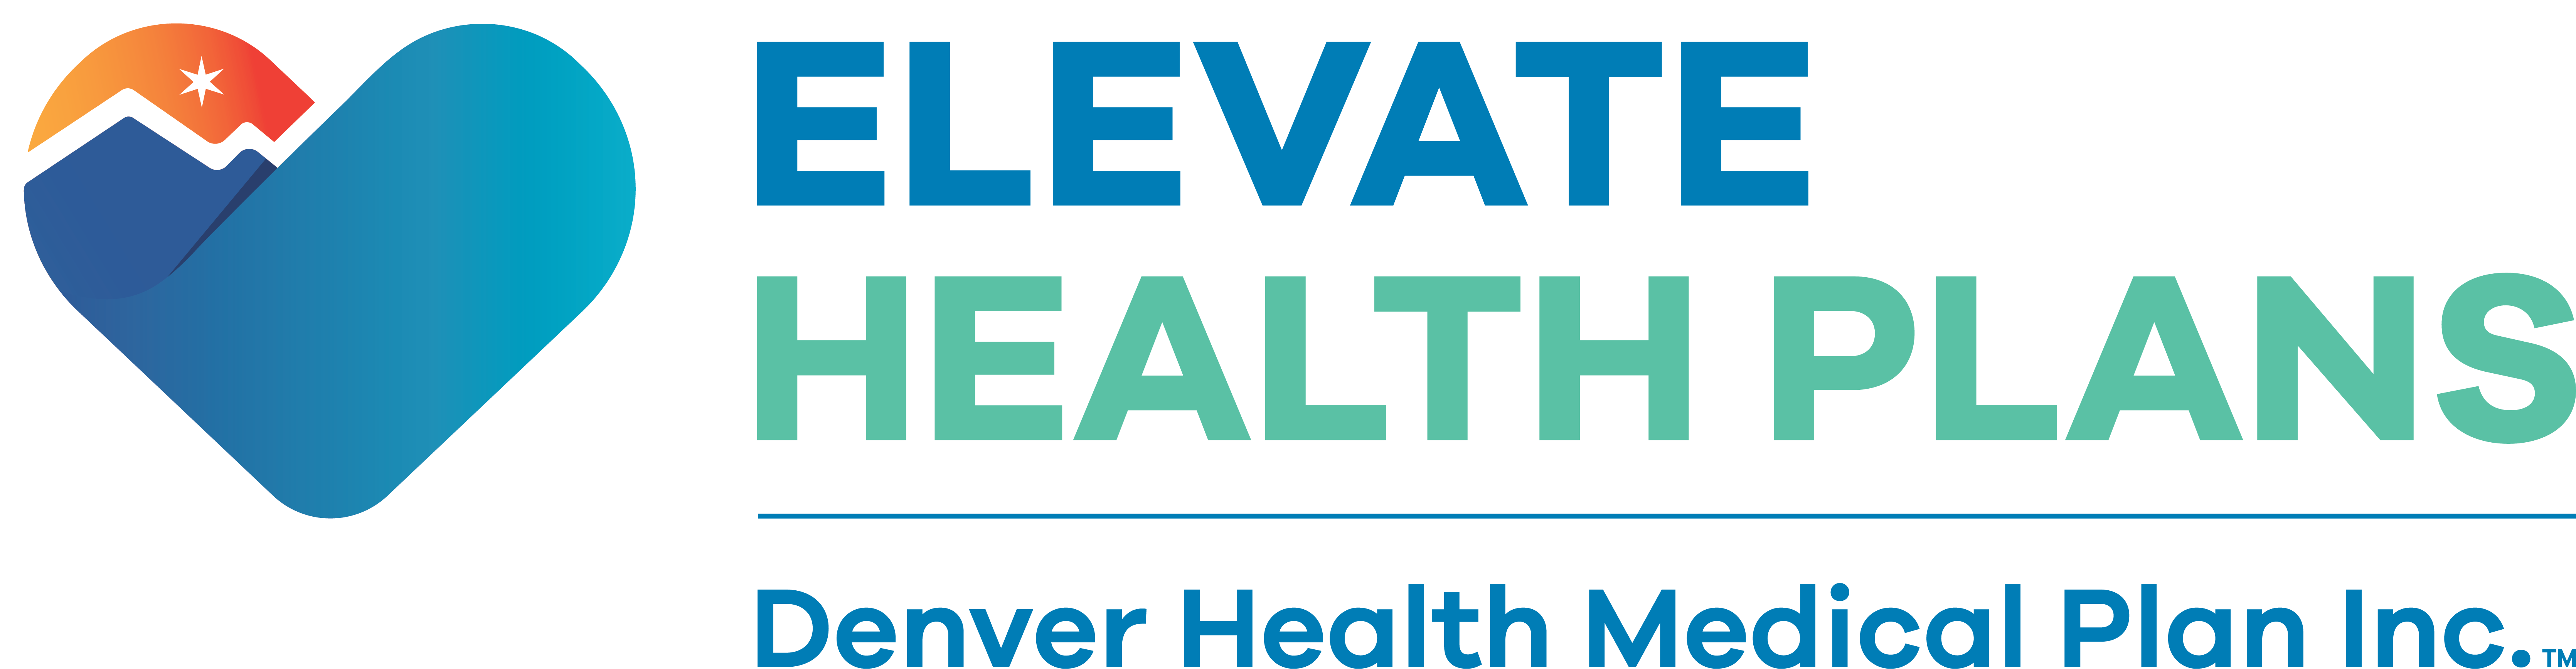 Elevate Exchange Plans by Denver Health Medical Plan, Inc.